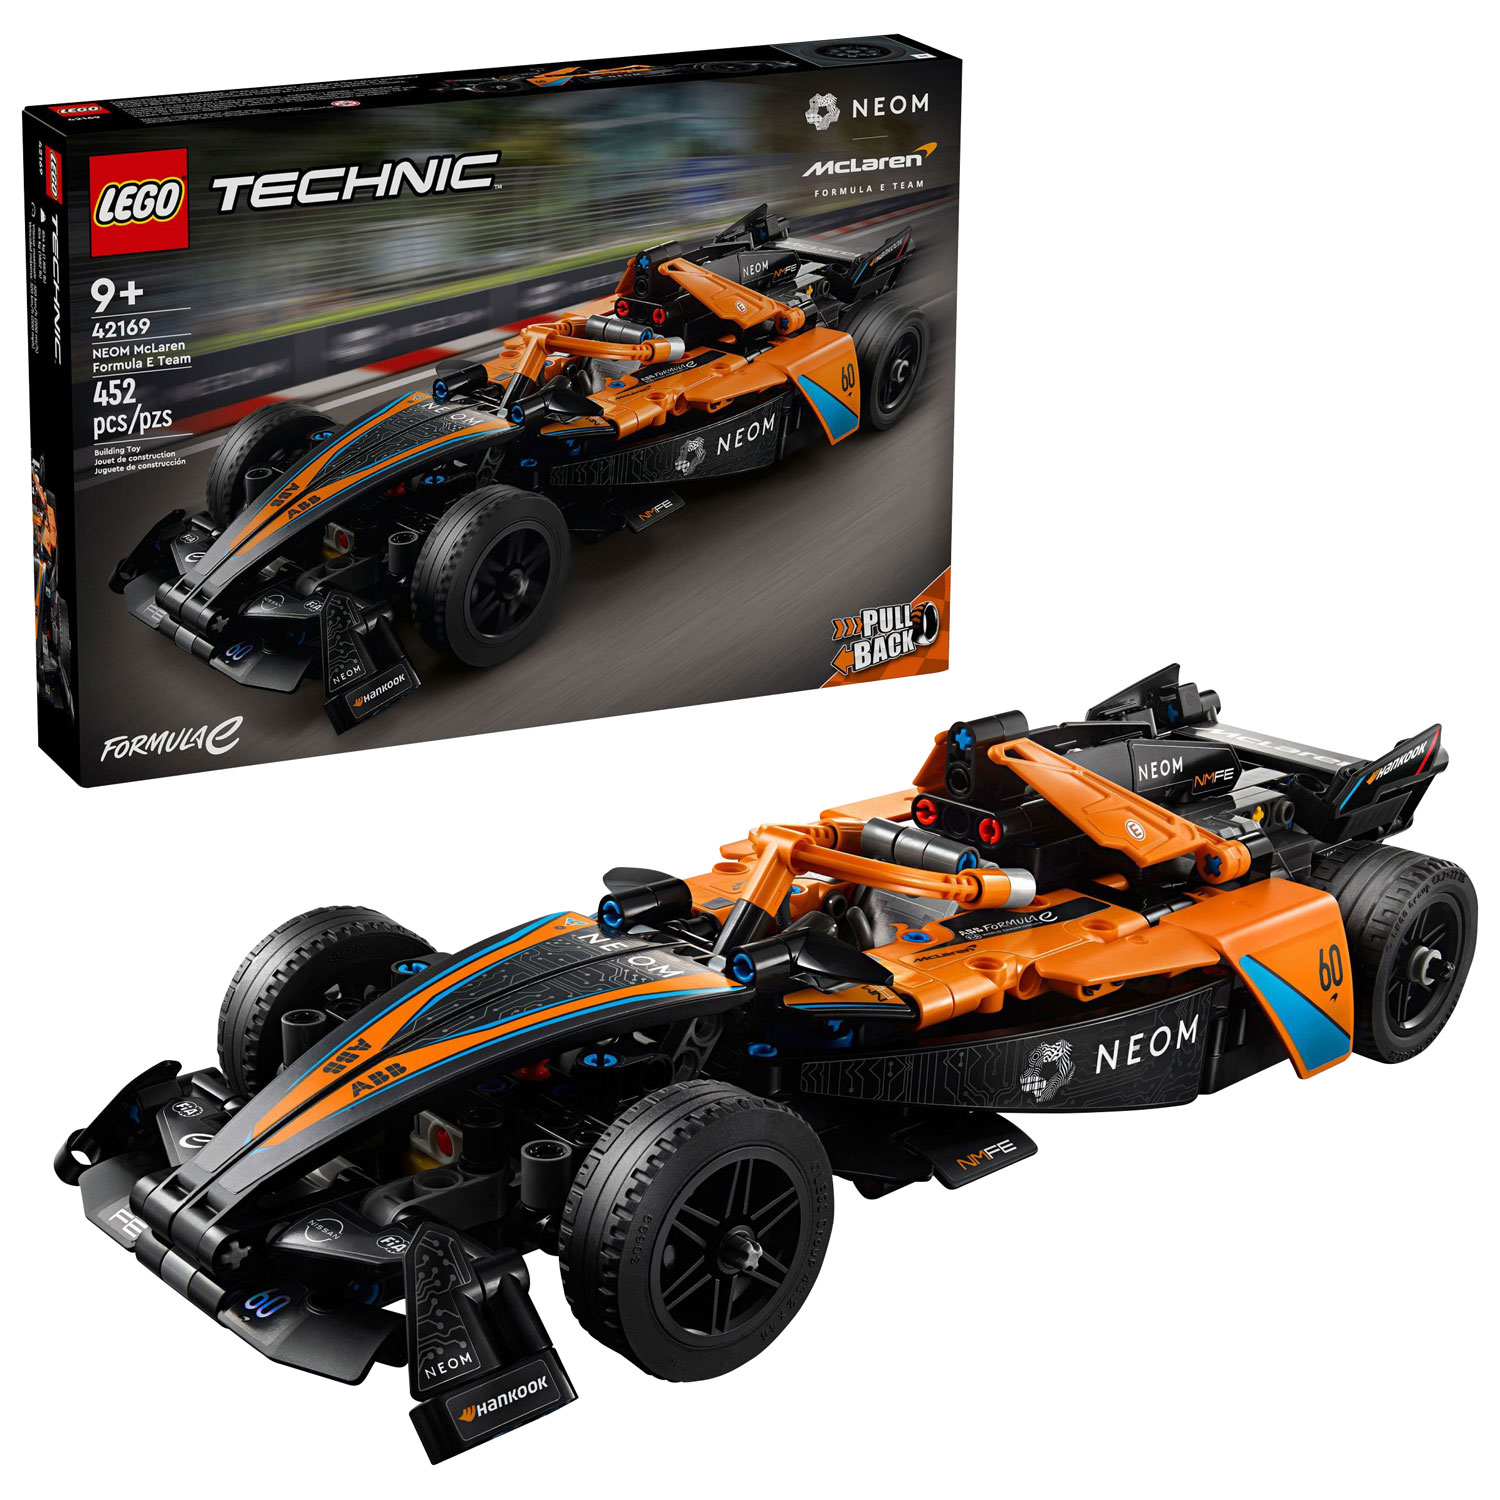 LEGO Technic: NEOM McLaren Formula E Team Race Car Toy Model Set - 452 Pieces (42169)